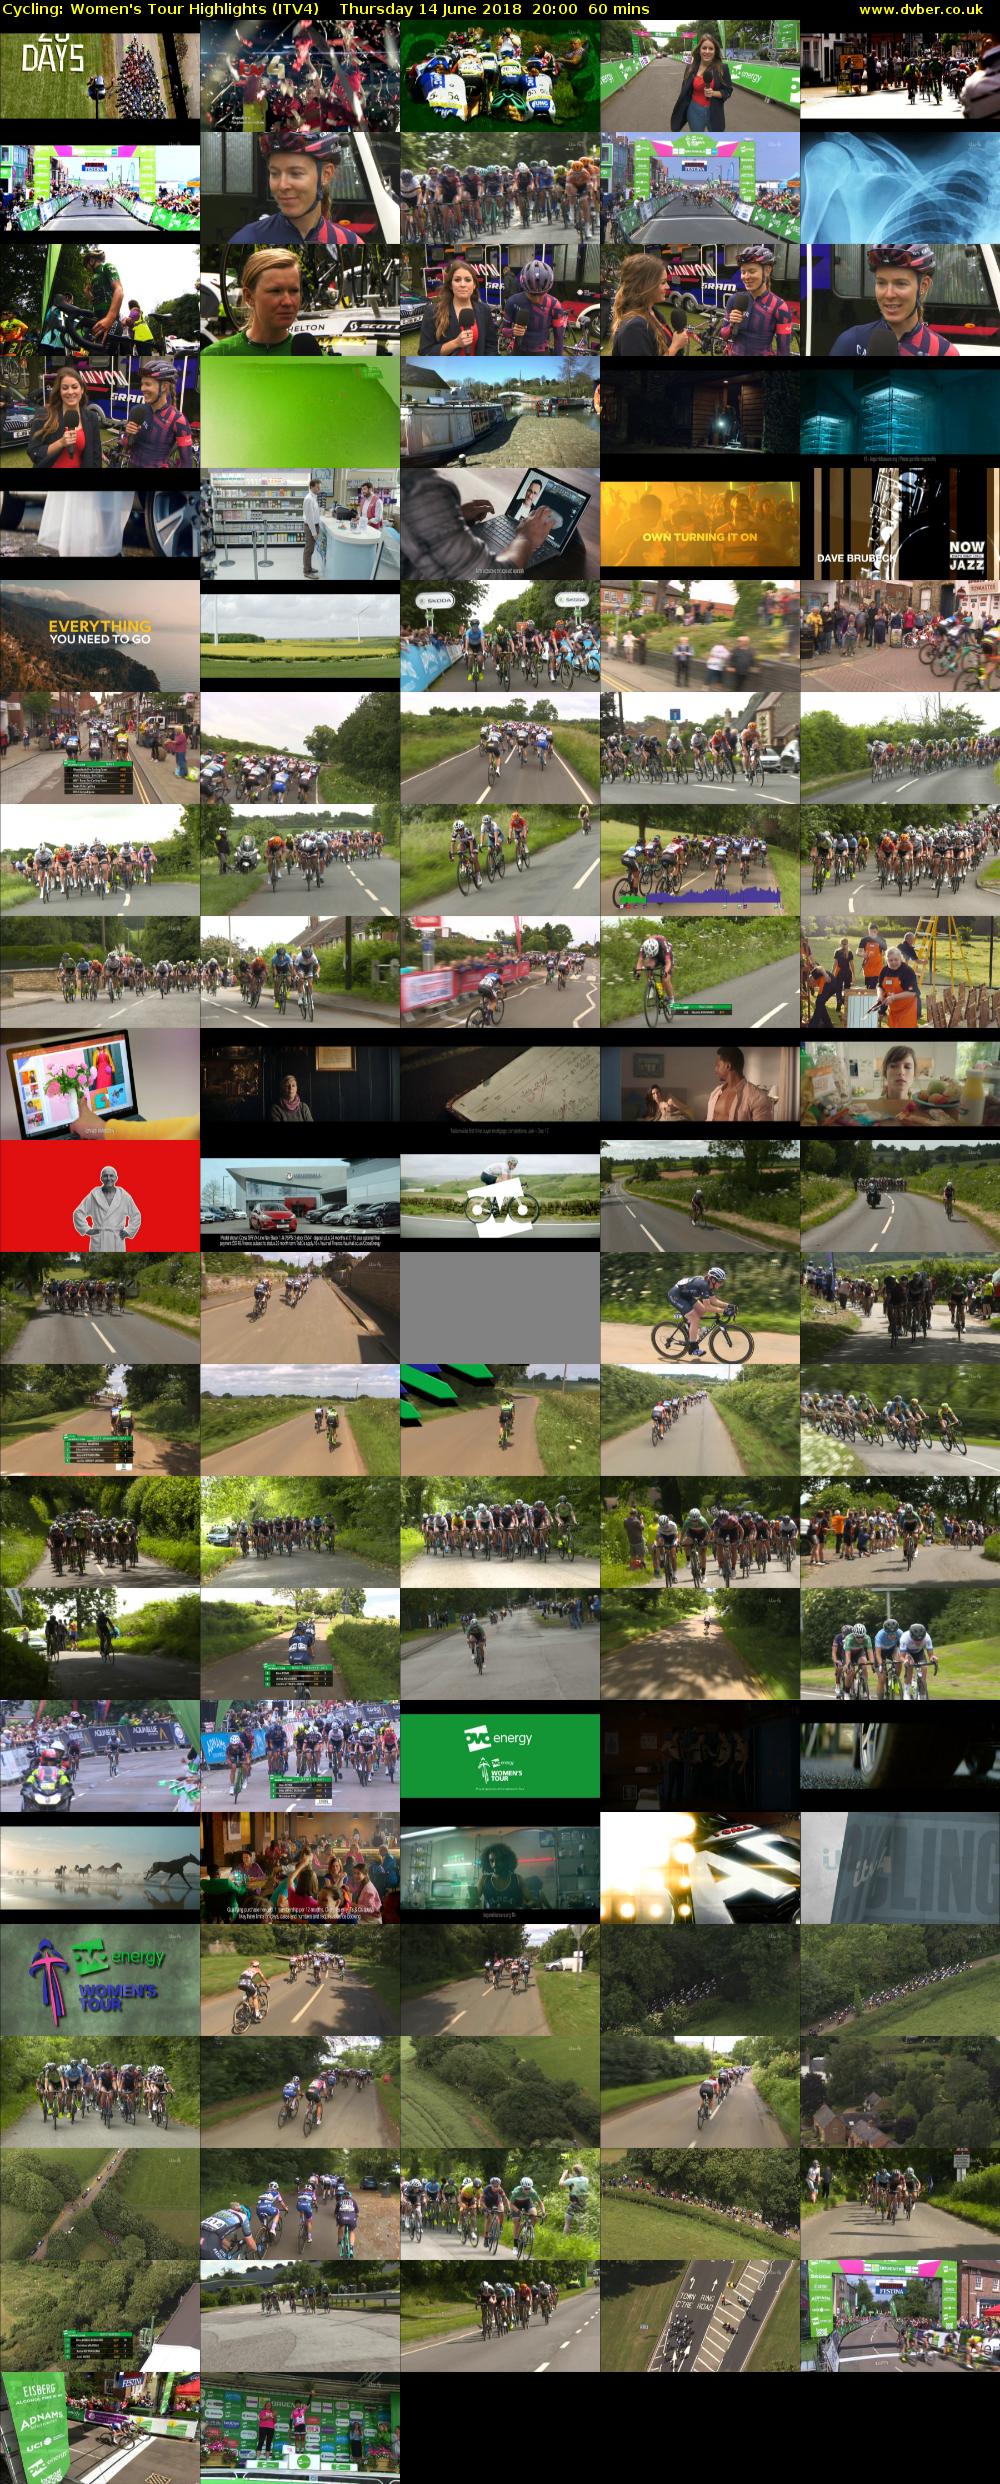 Cycling: Women's Tour Highlights (ITV4) Thursday 14 June 2018 20:00 - 21:00